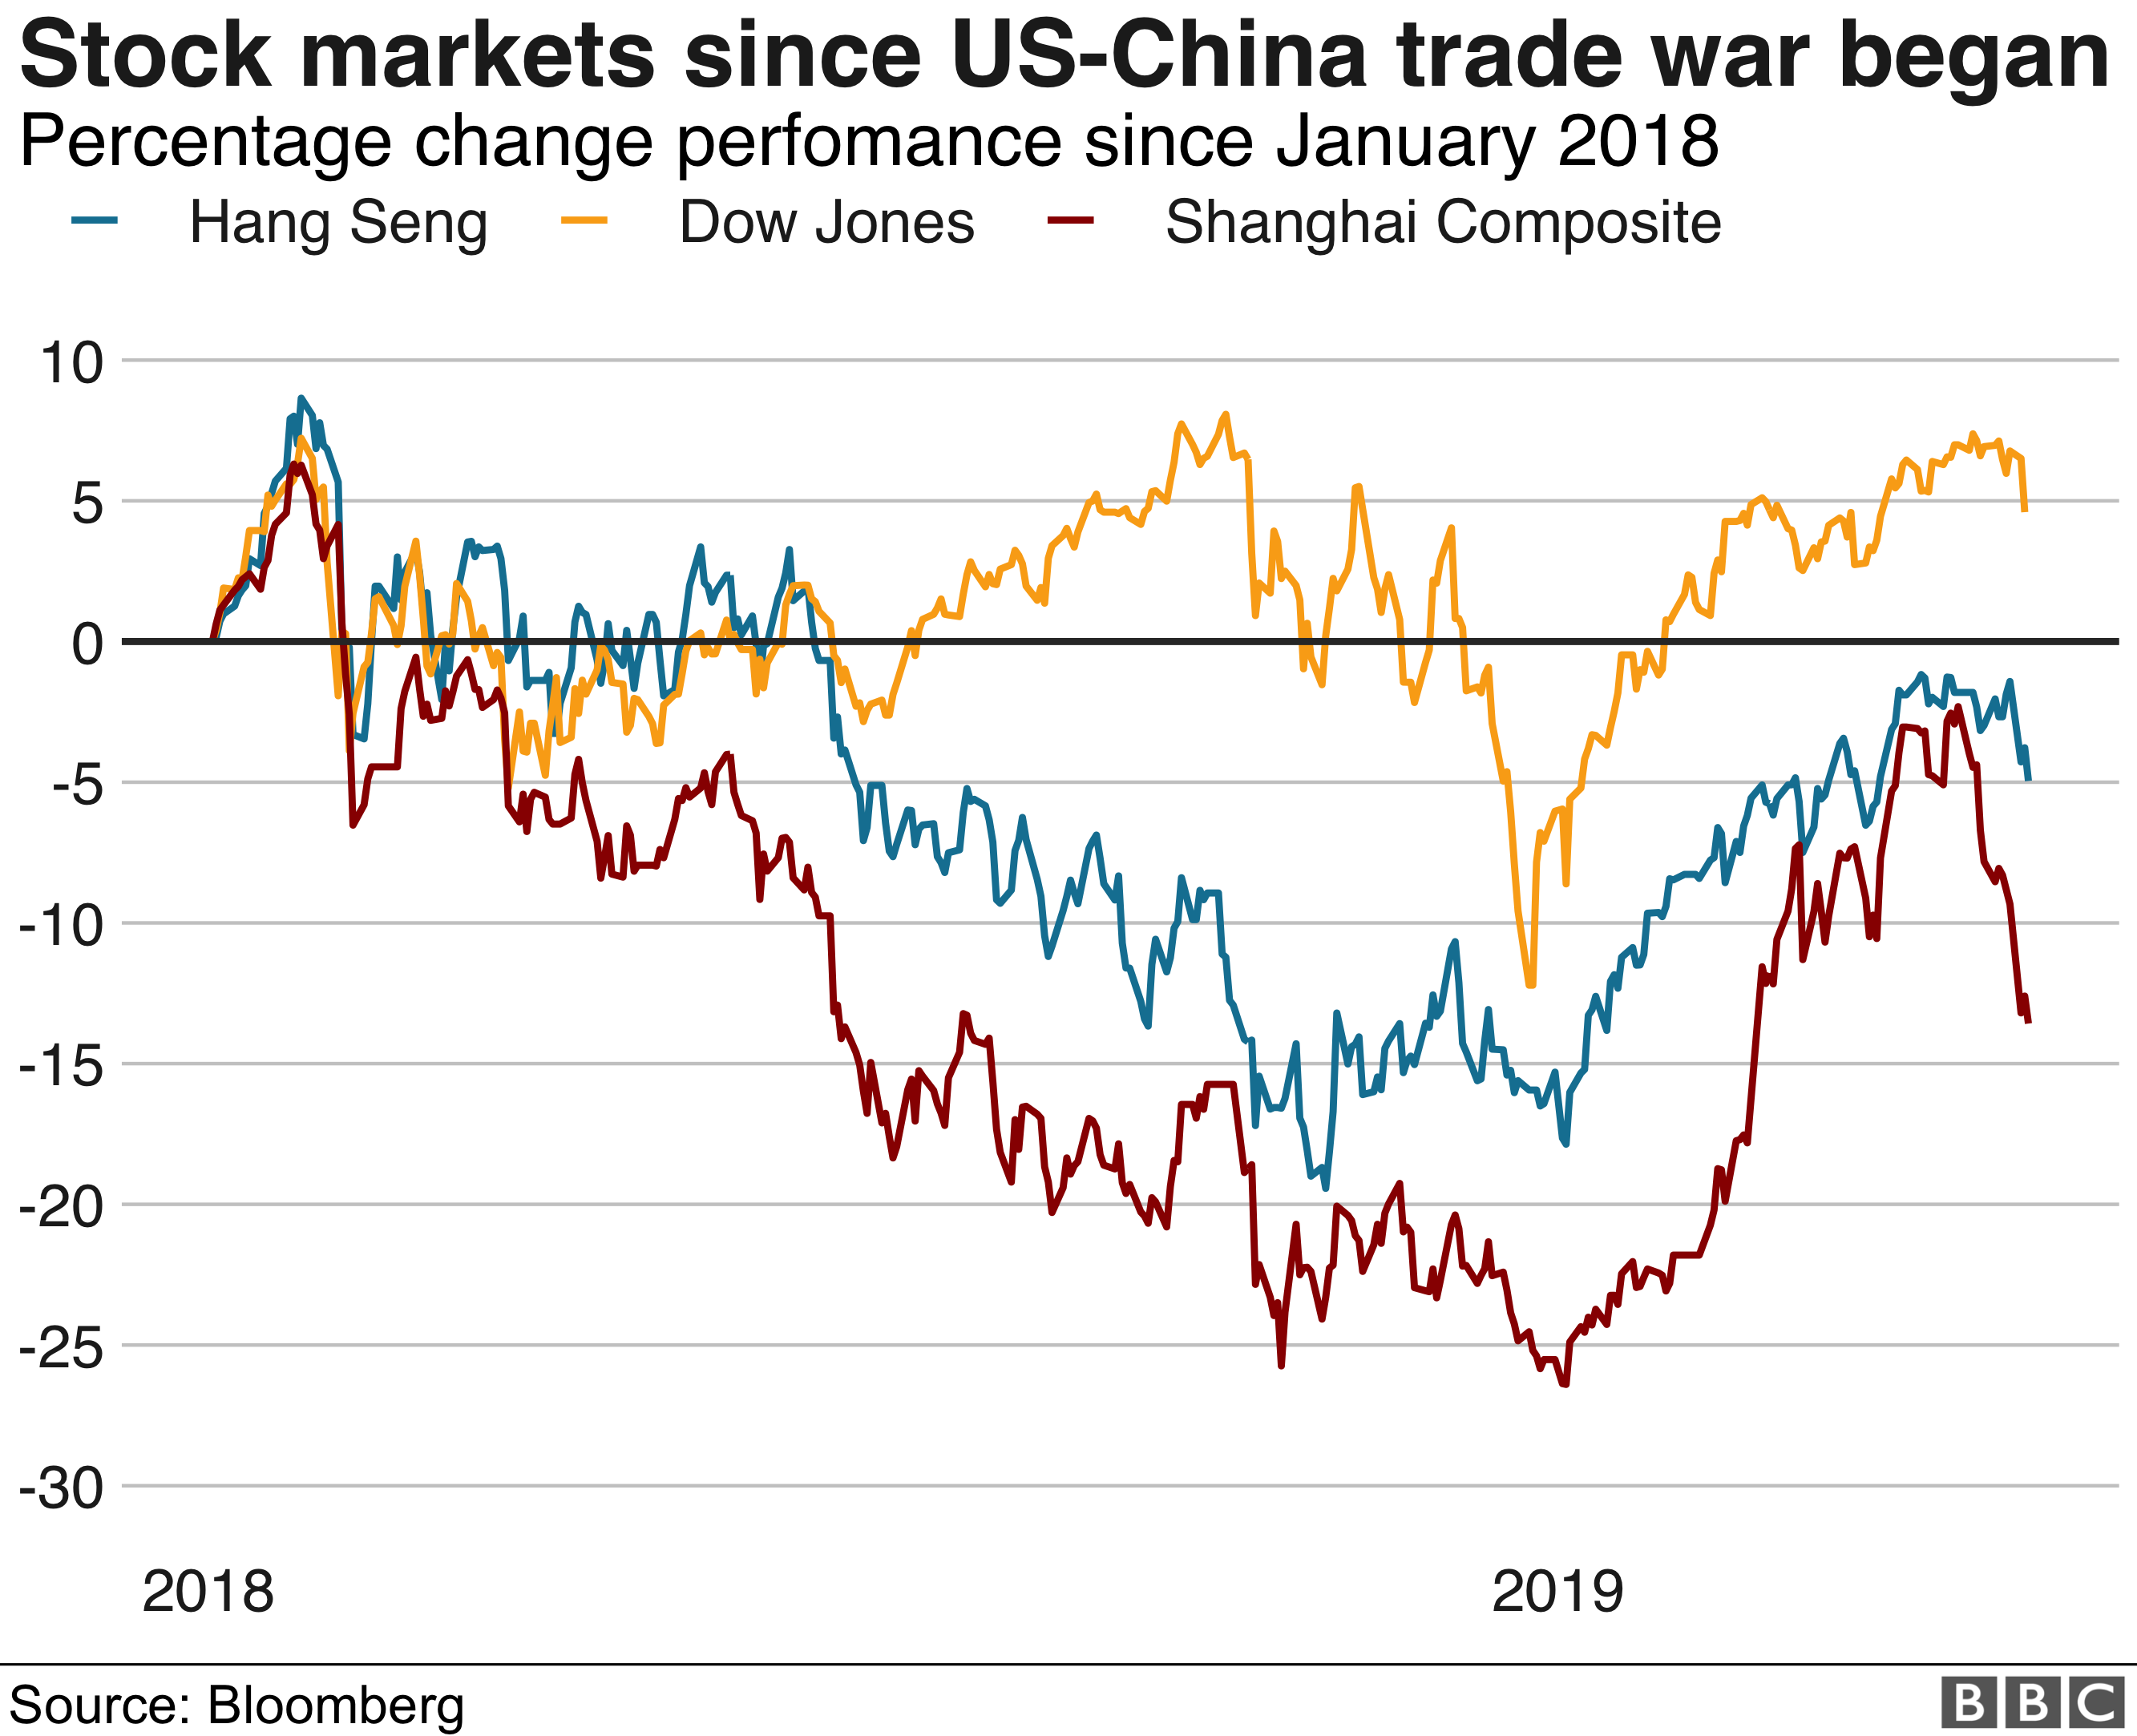 Stock markets reaction to trade war